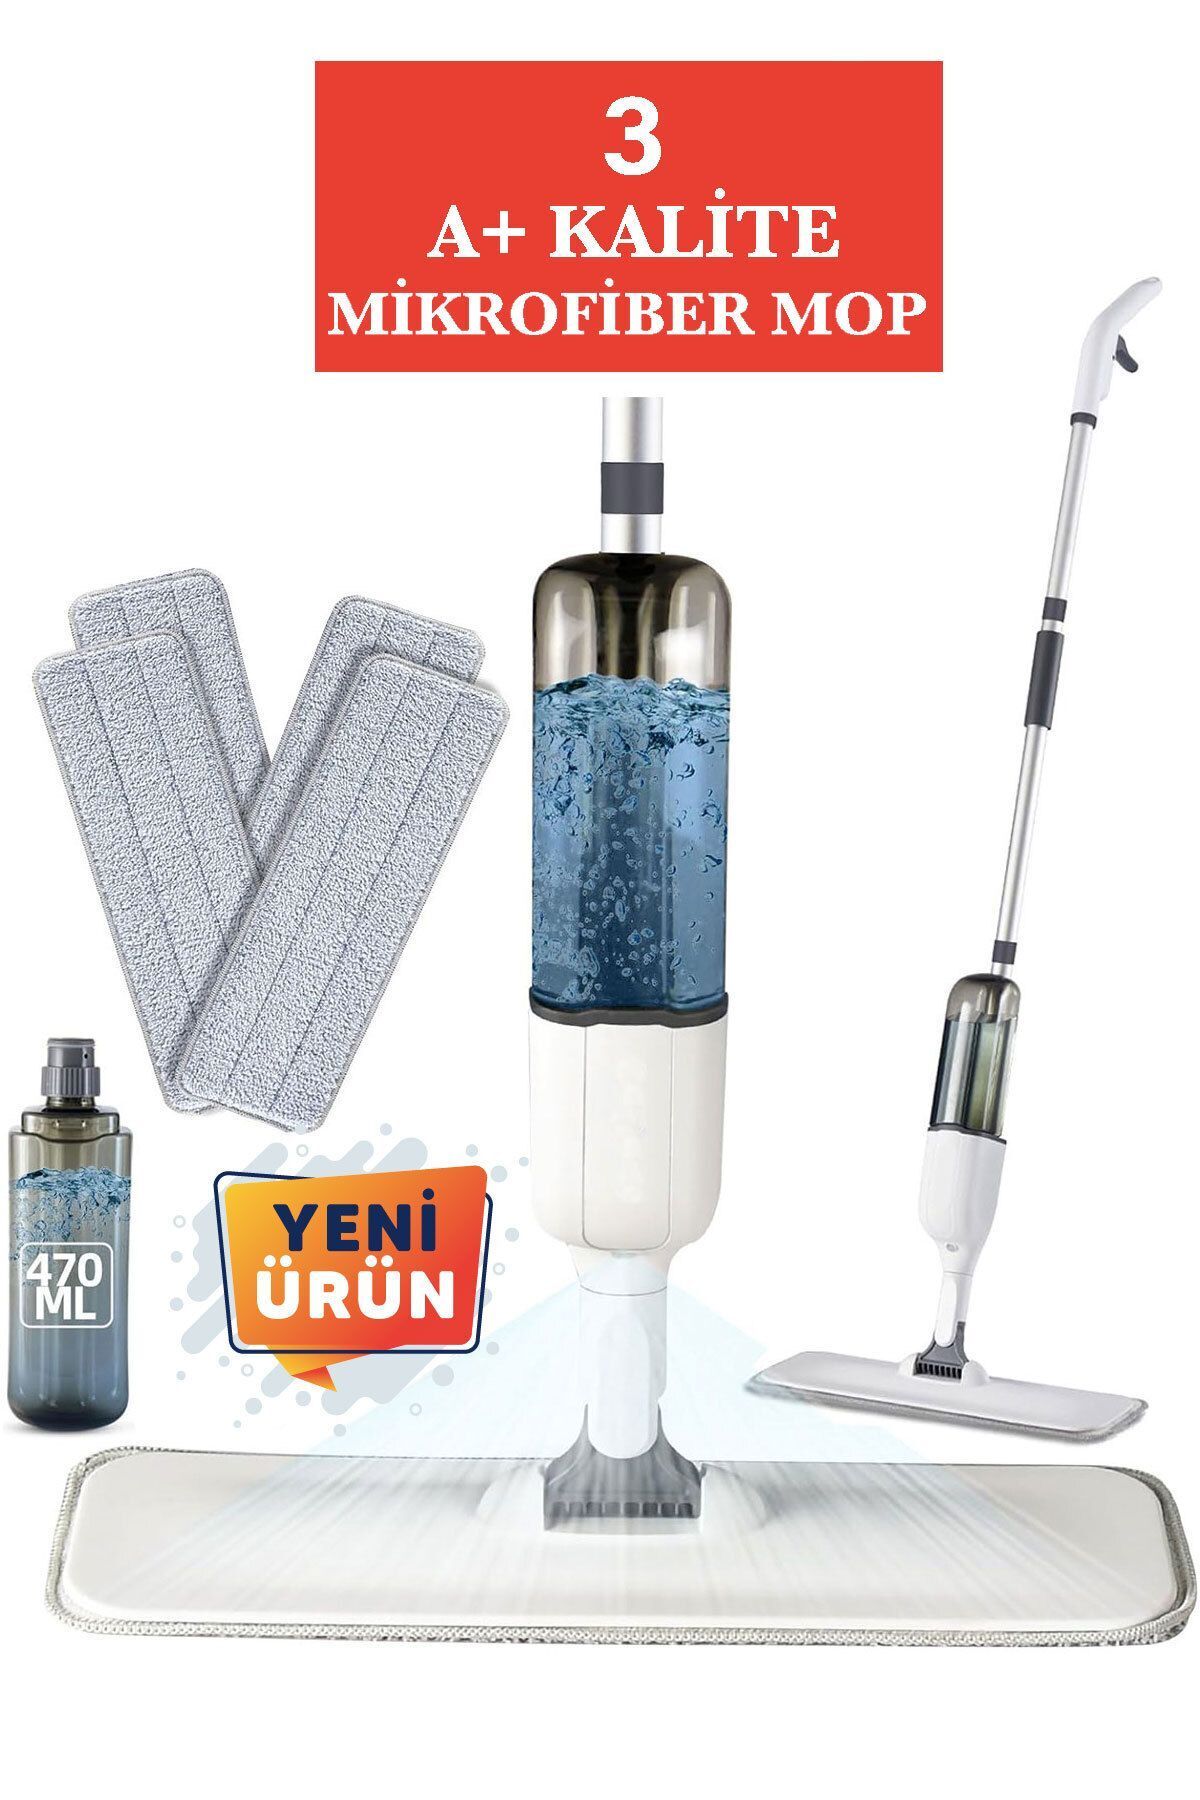 Egonex Sprey Mop Su Hazneli Pratik Temizlik Seti 3 Adet Mikrofiber Spray Mop